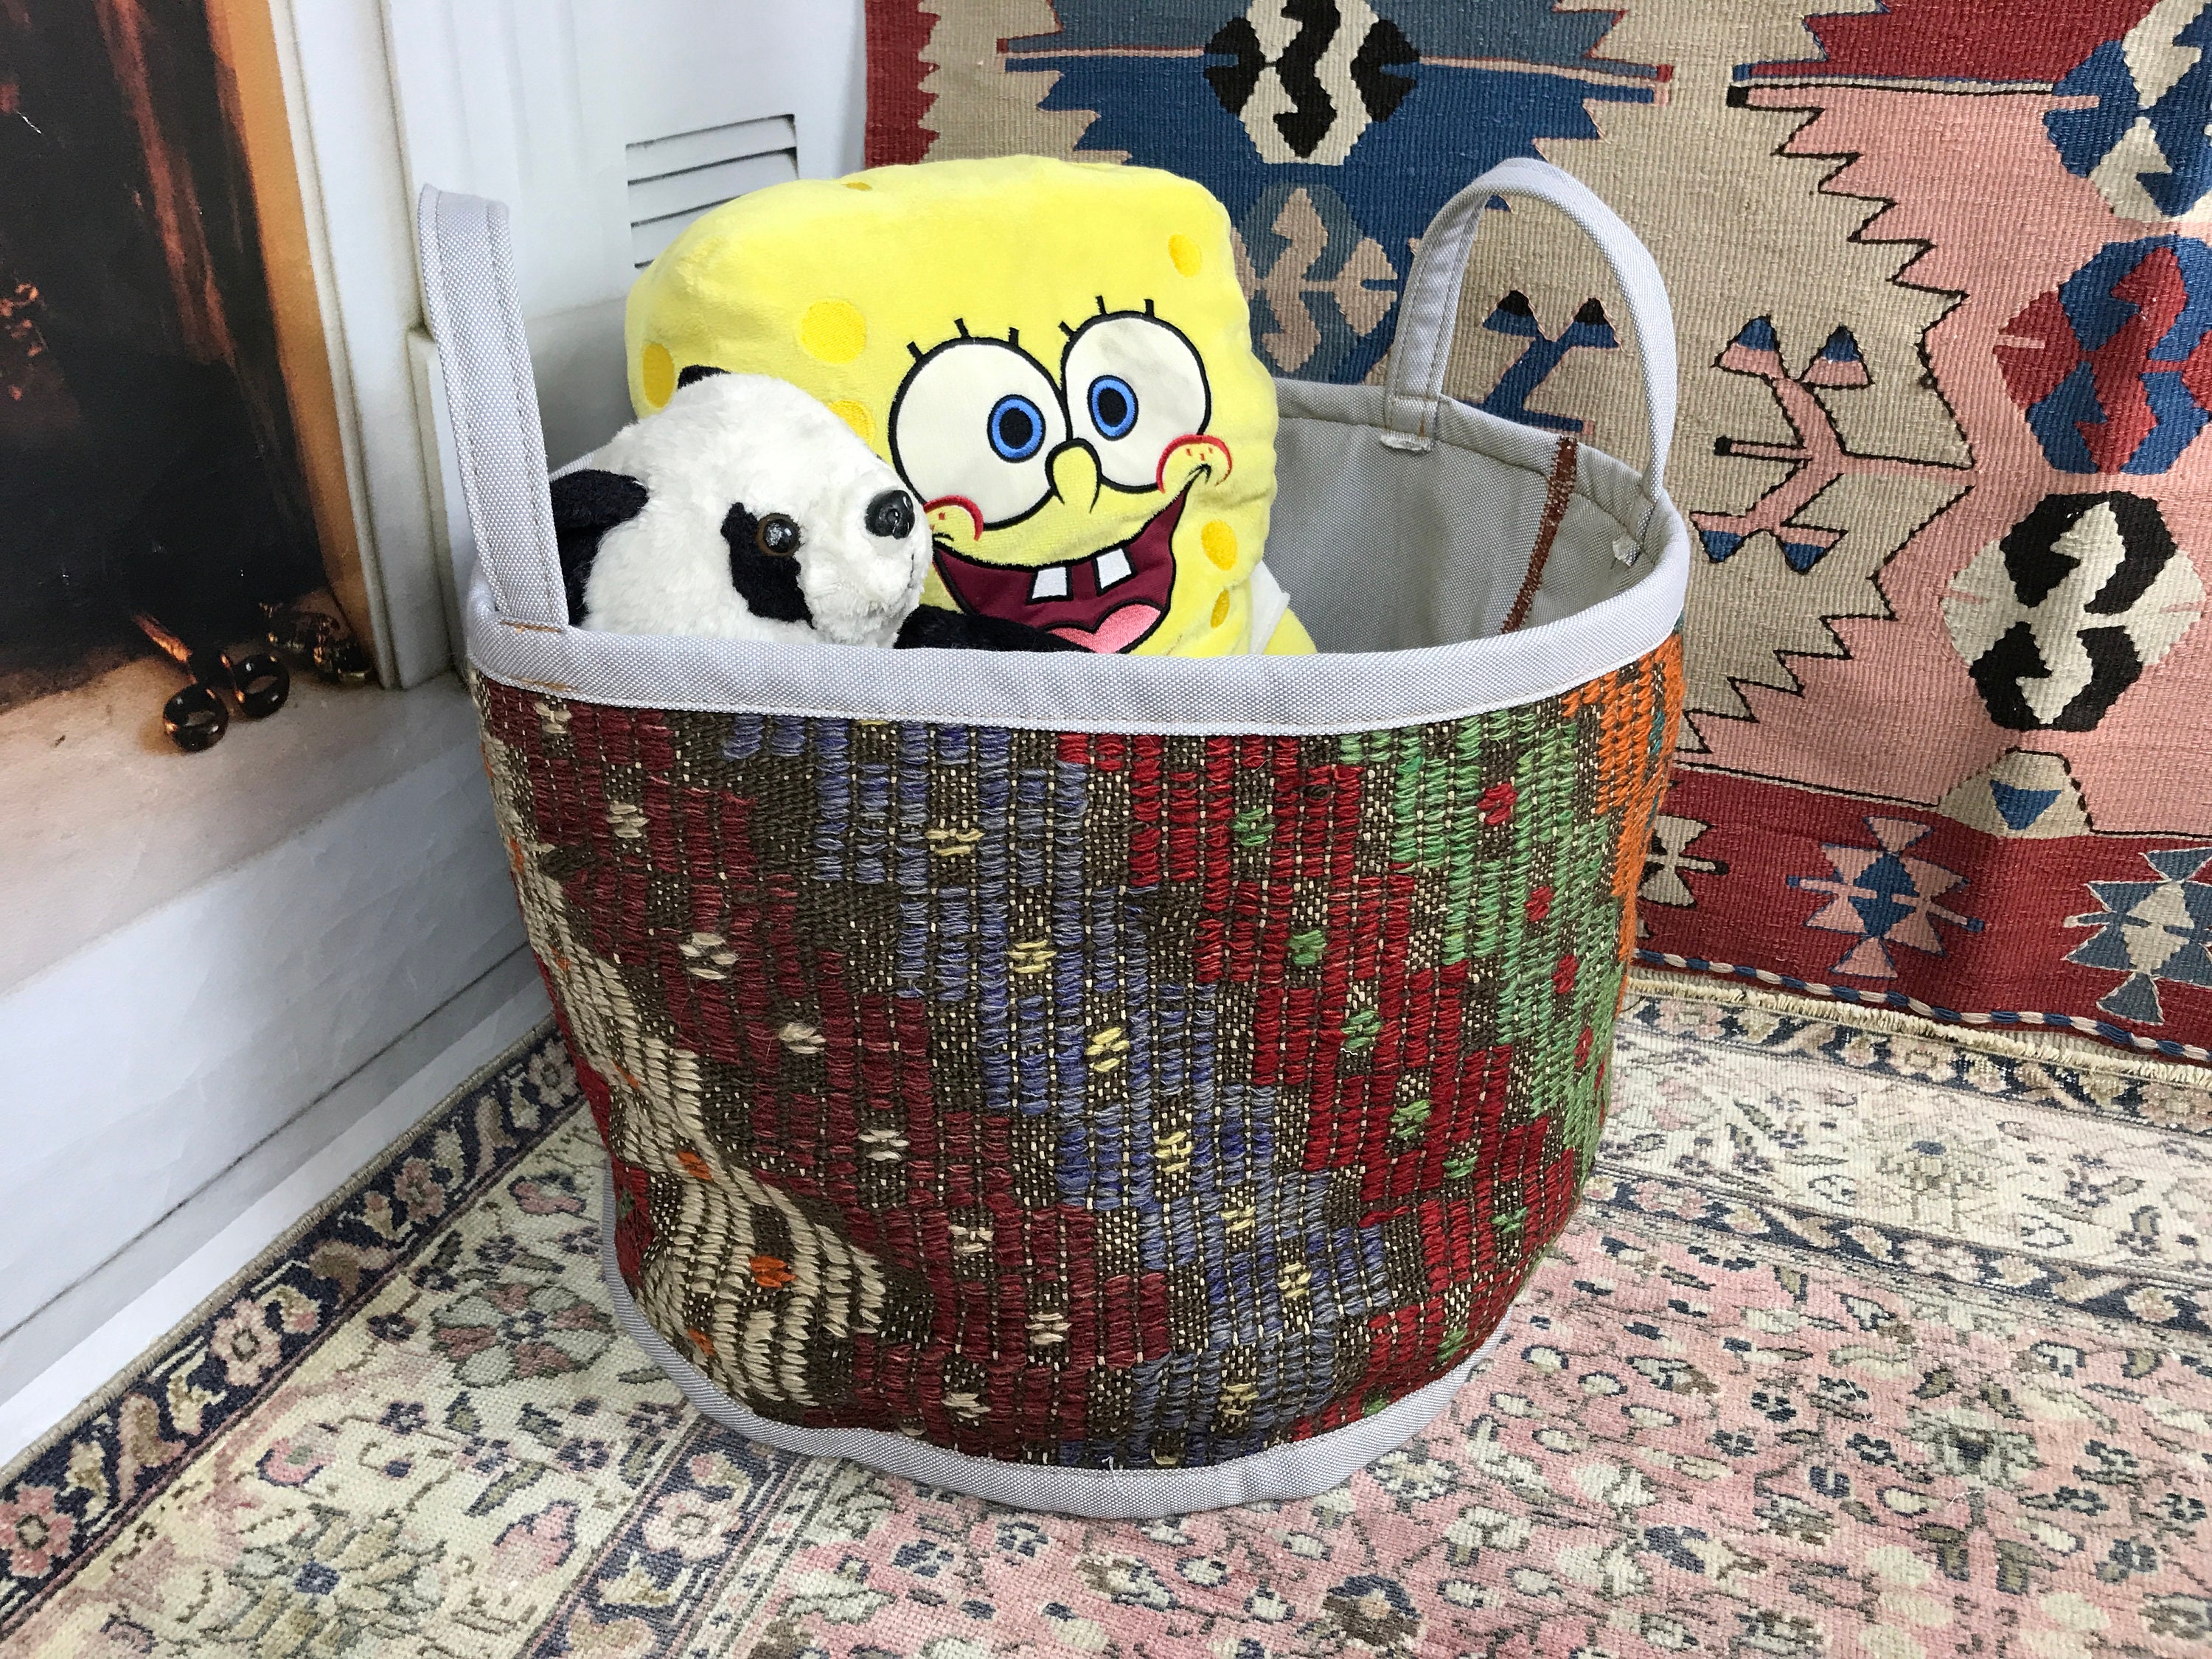 Turkish Rug Basket, Toy Storage Kids Room Organizer, Hobby